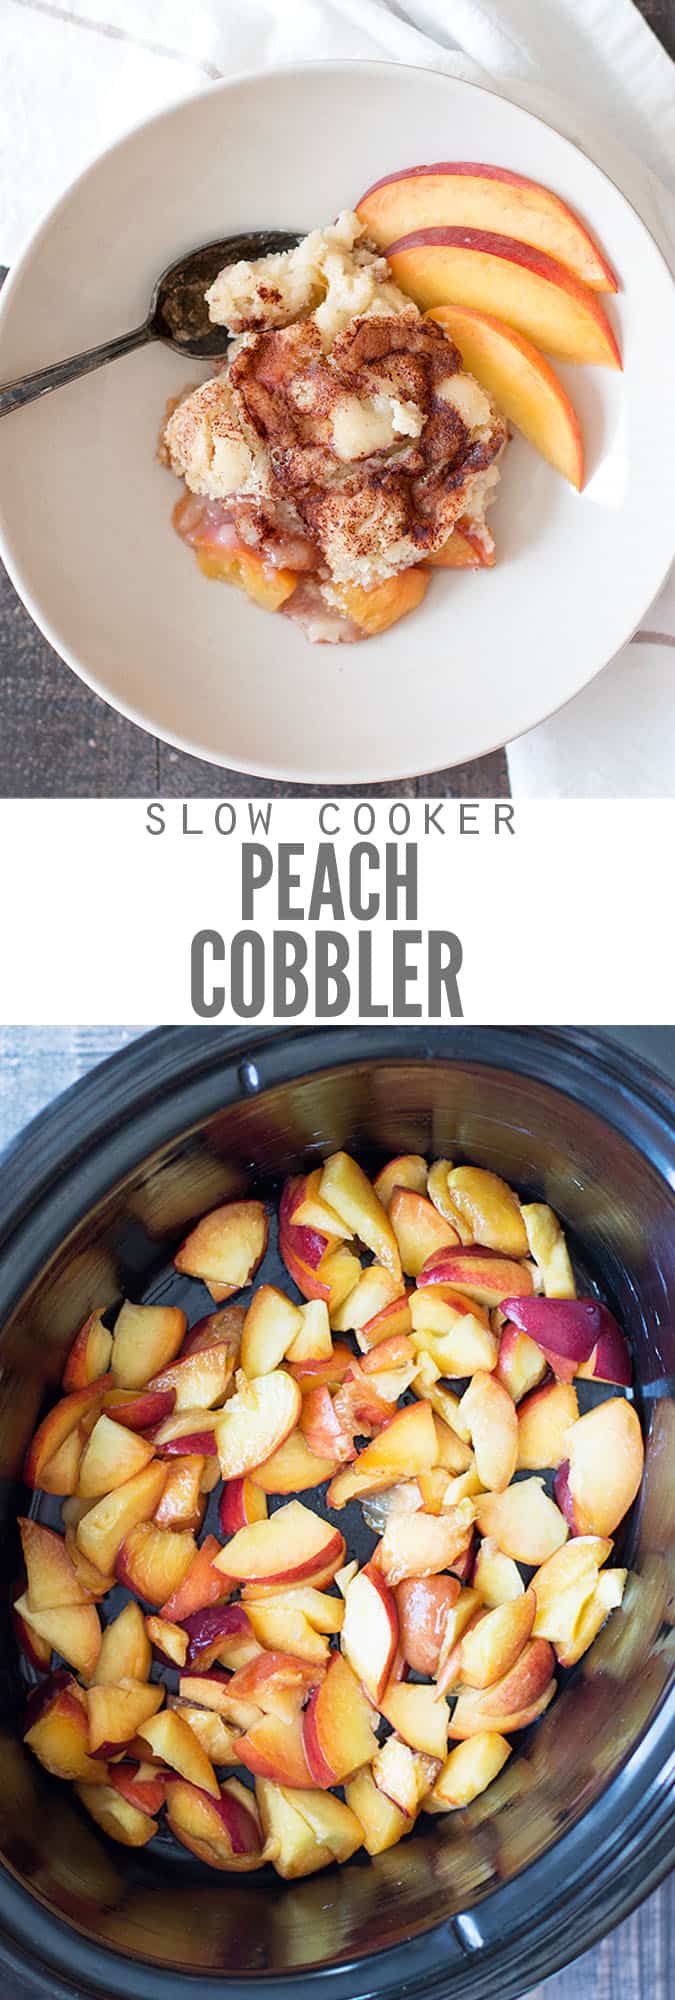 Slow Cooker Peach Cobbler | Healthy Peach Cobbler Dump Cake